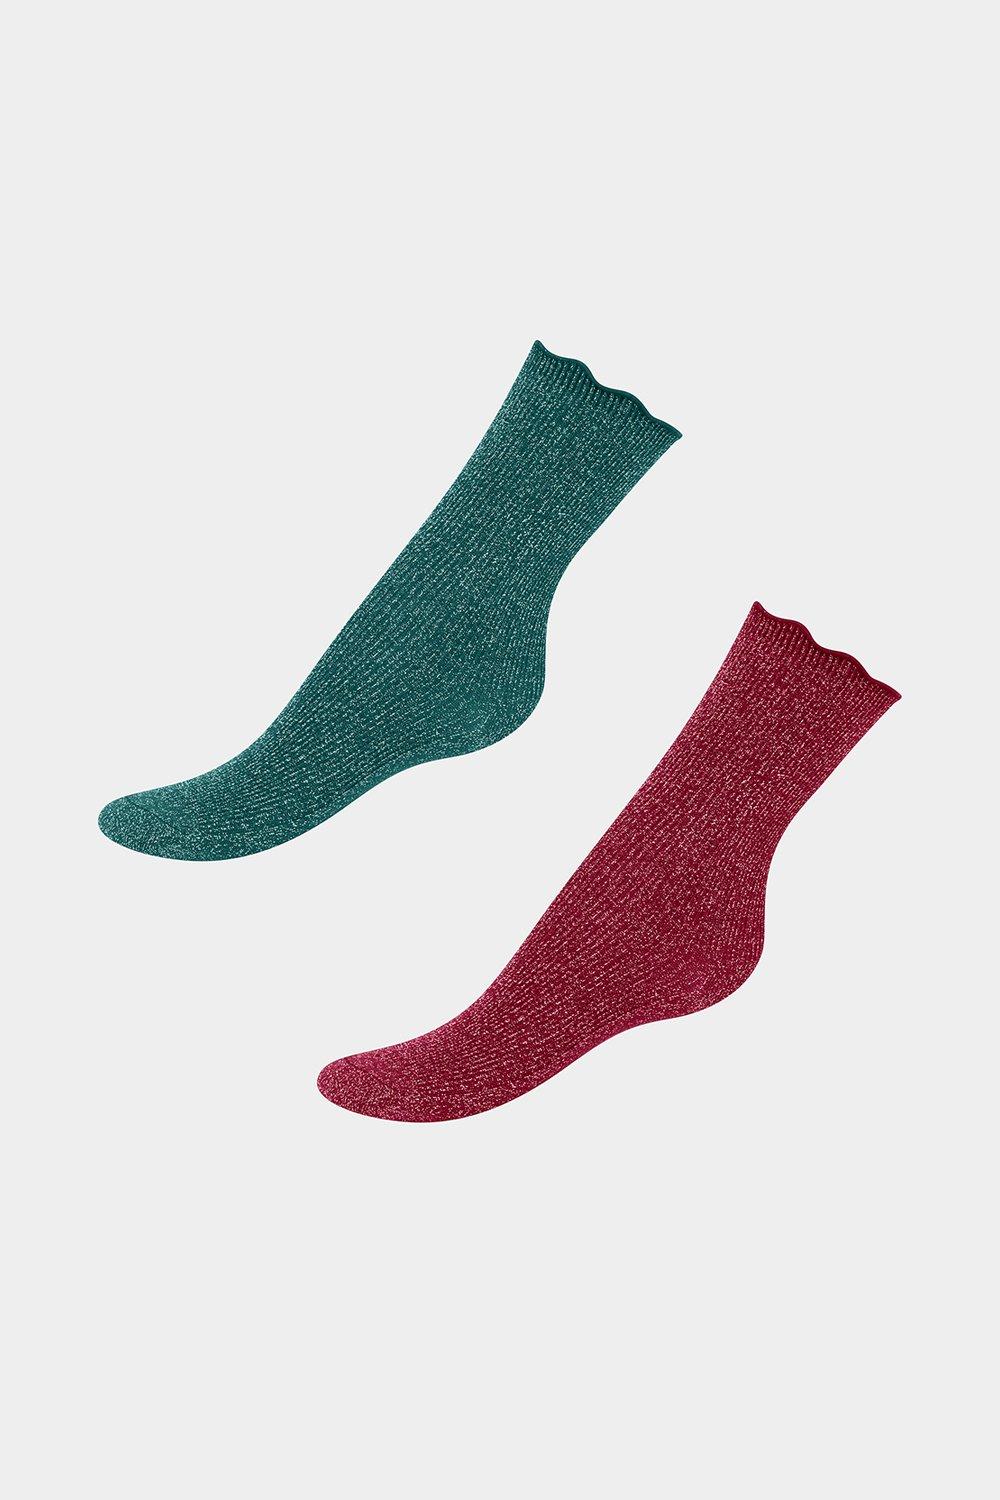 Retro Sparkle Socks